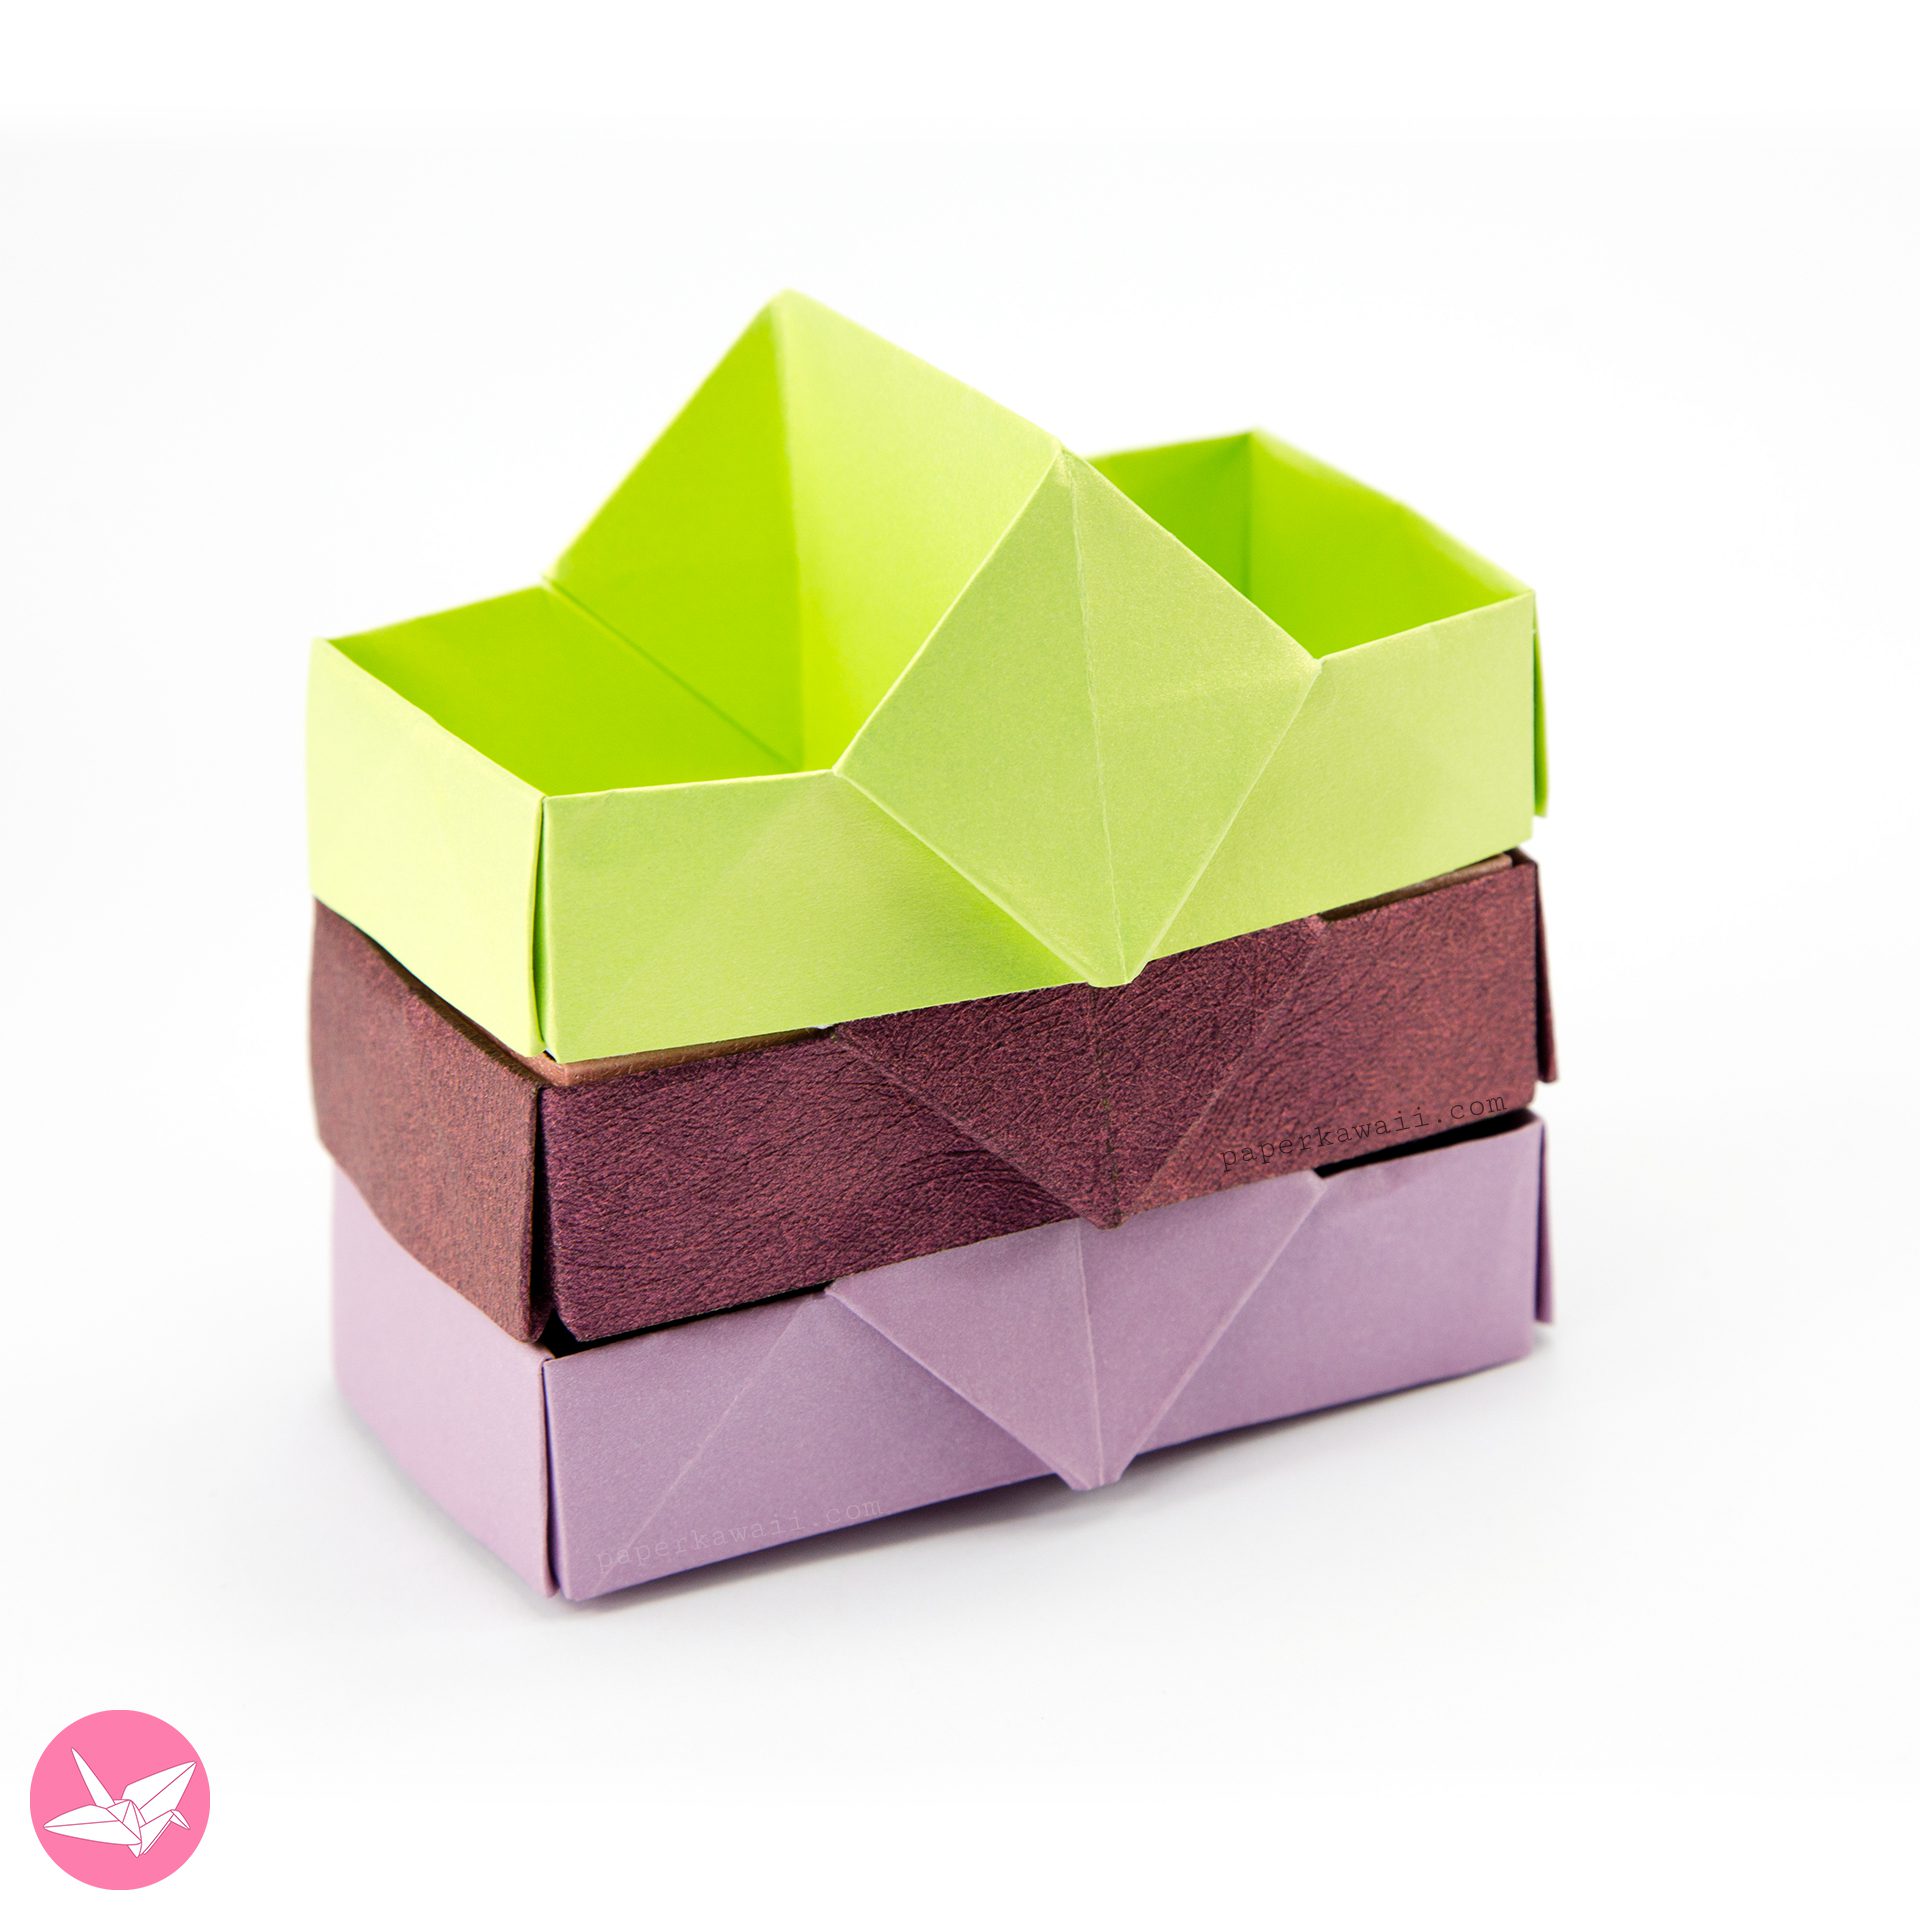 Origami 2 Section Tray Box Paper Kawaii 05